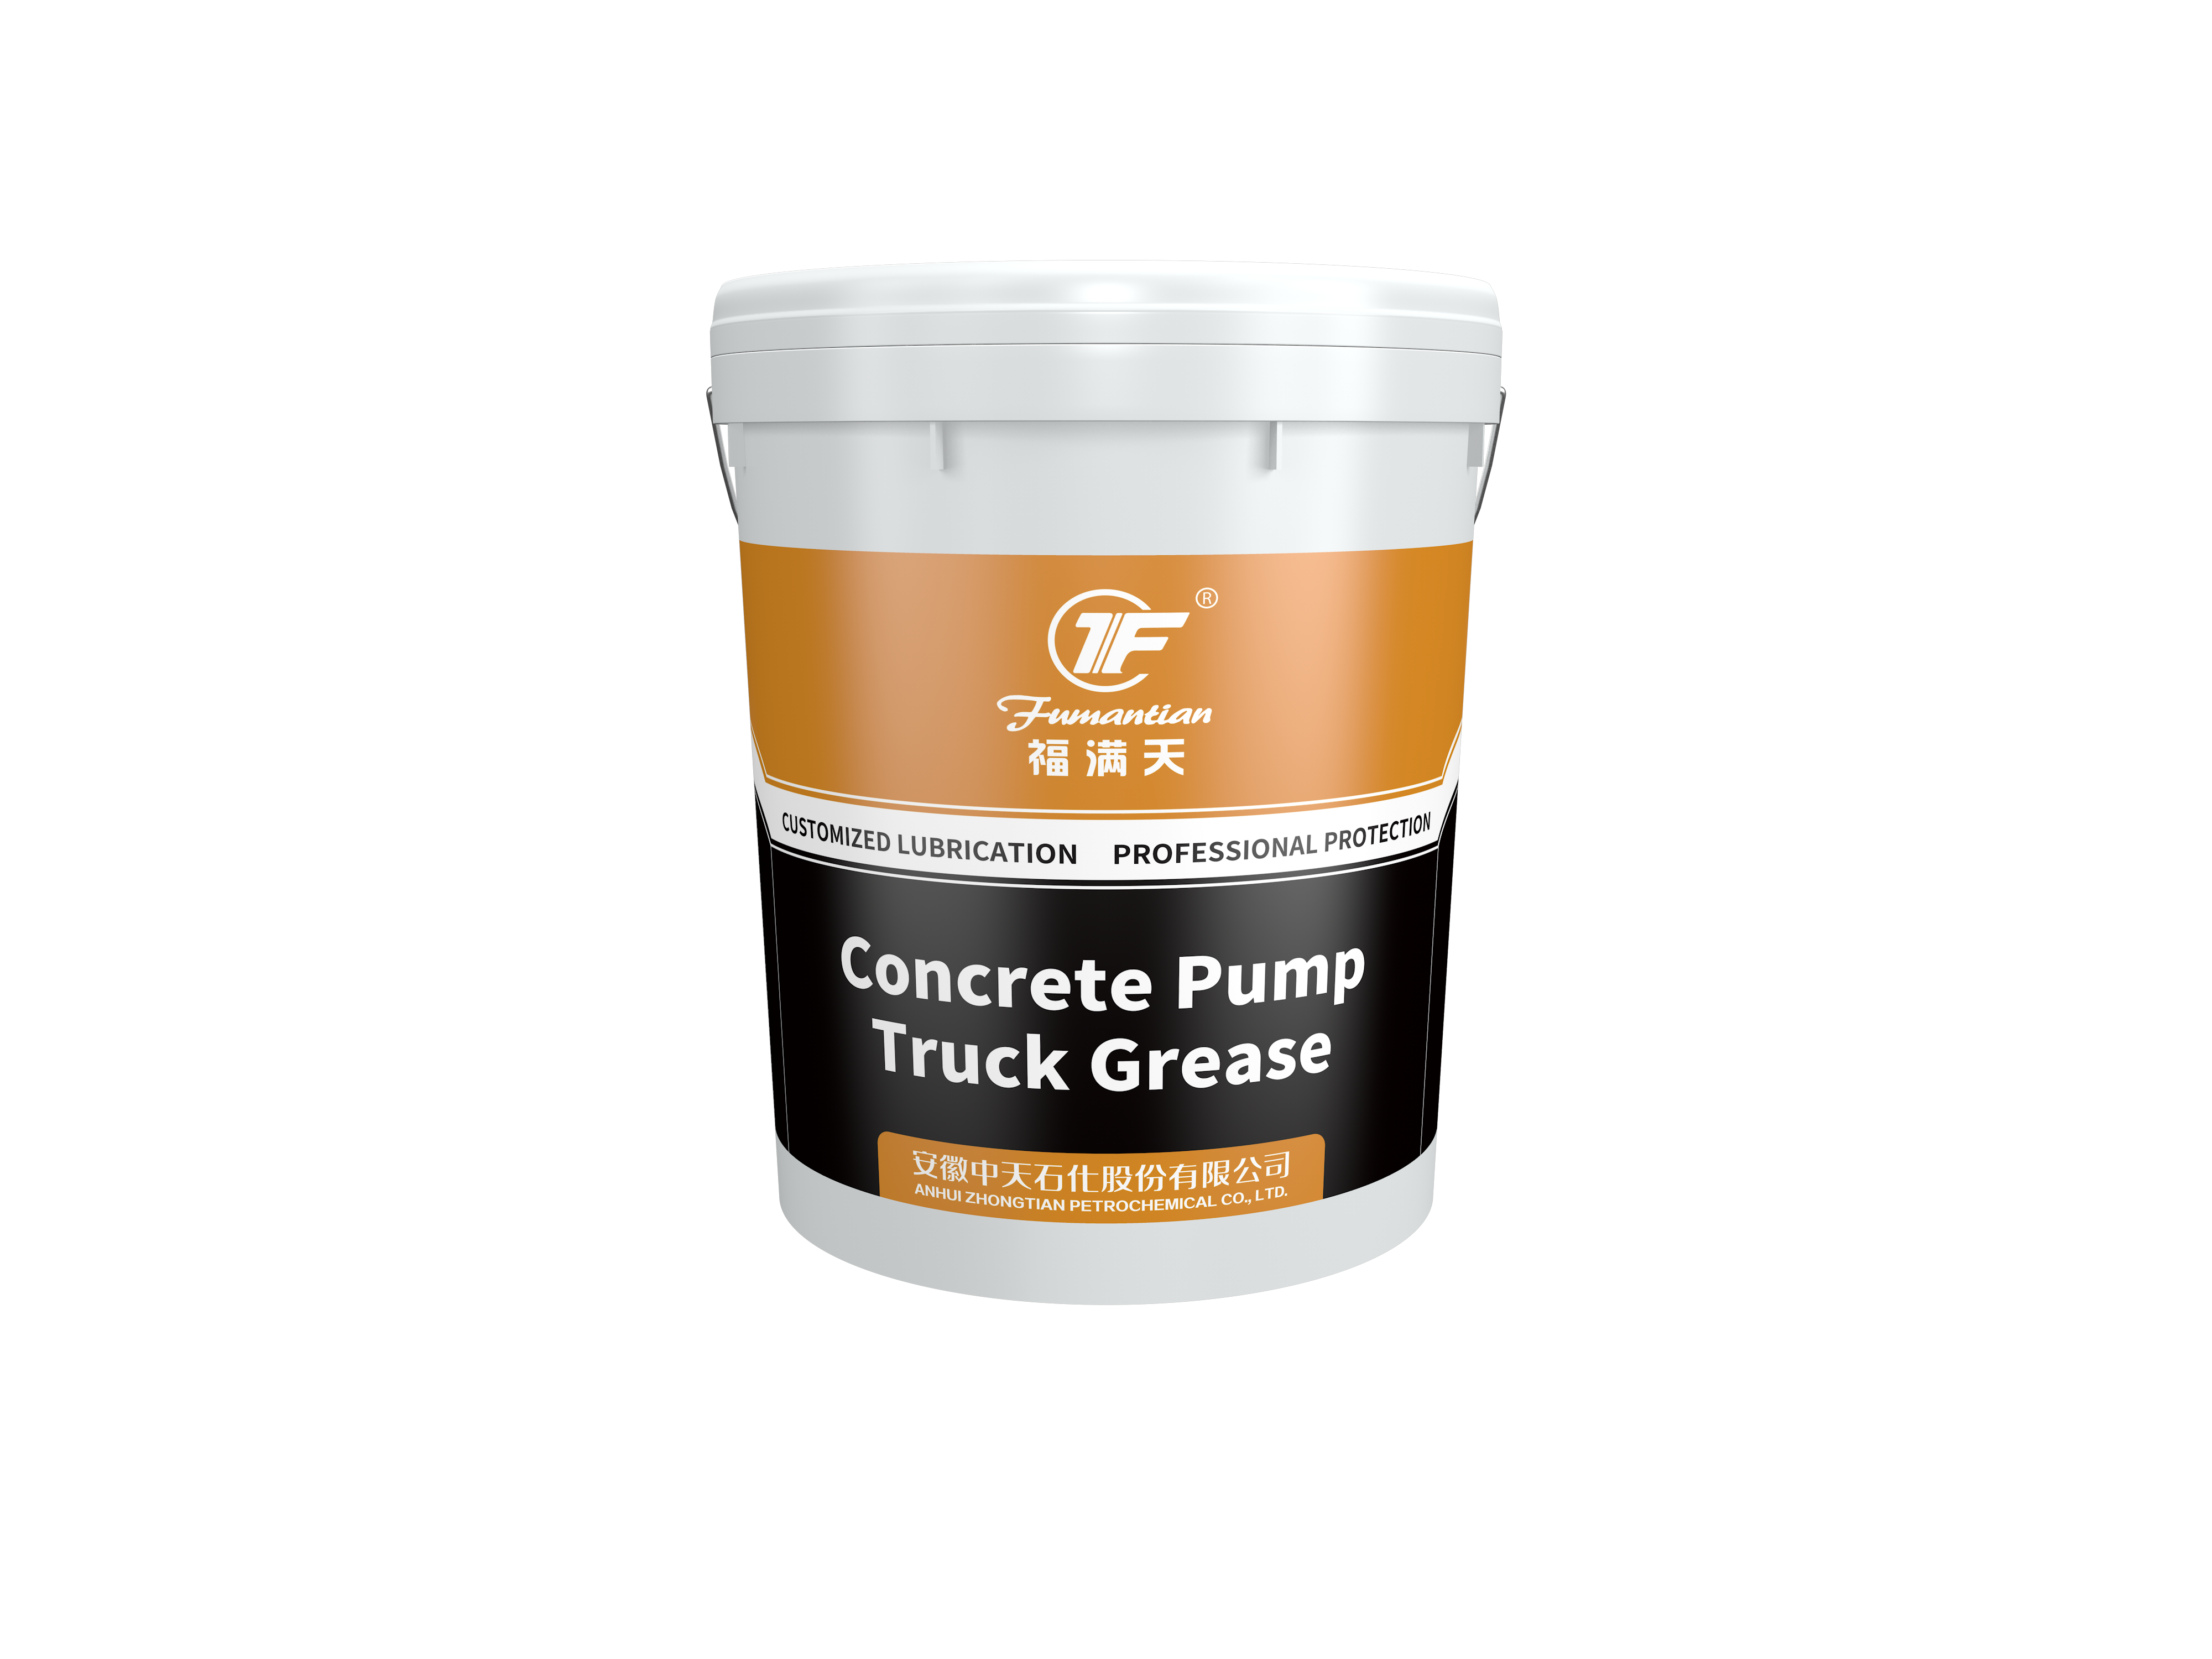 Concrete Pump Truck Grease